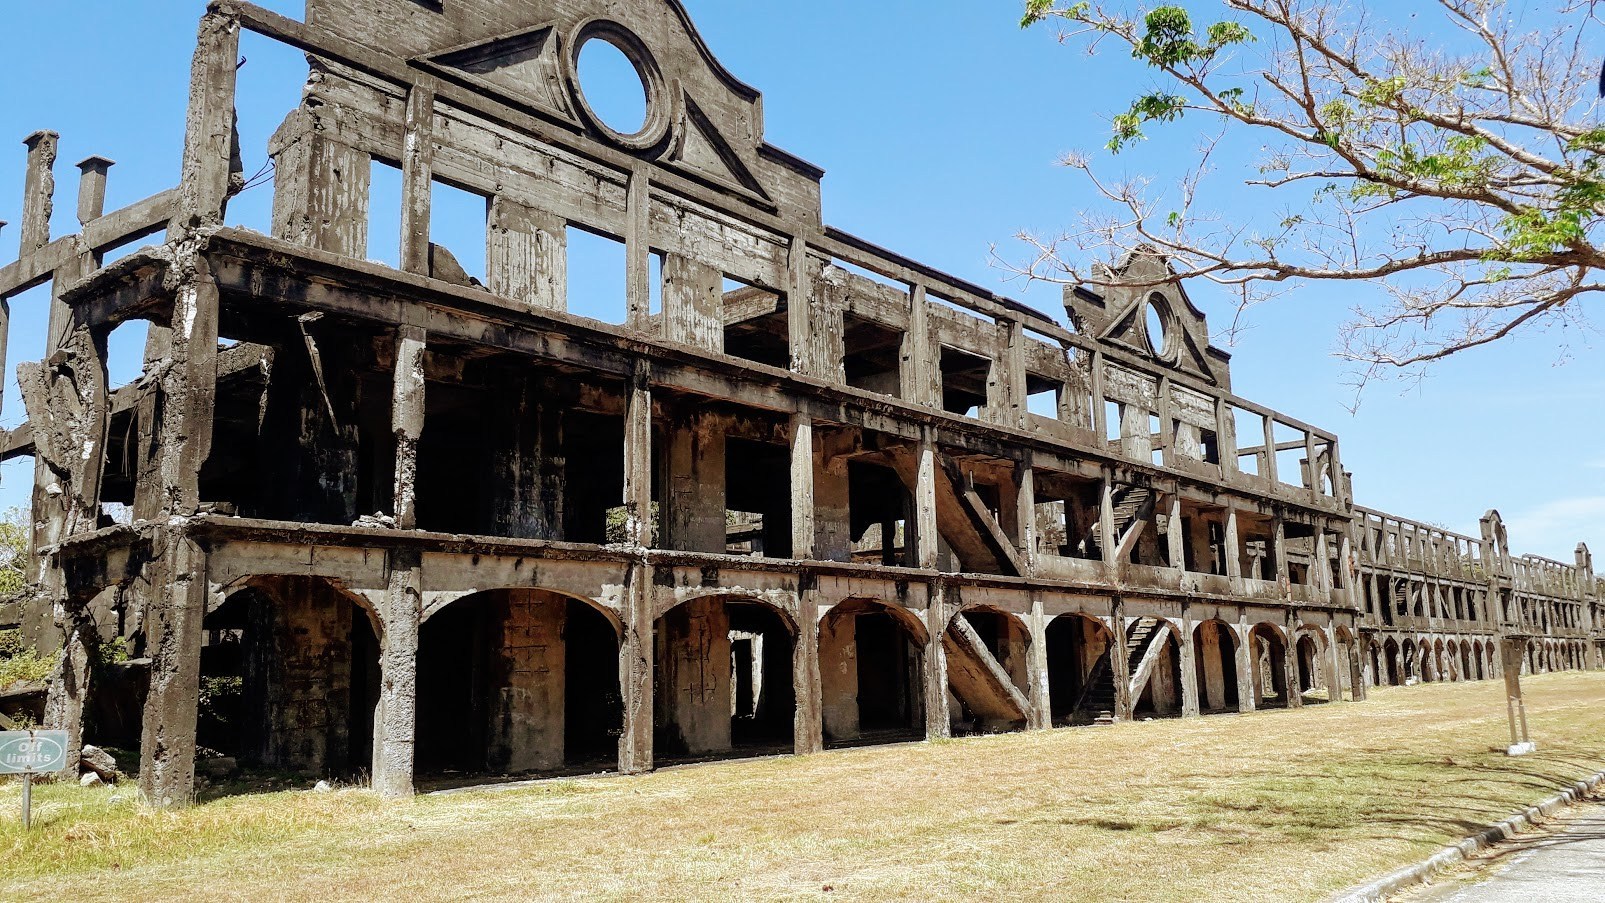 Corregidor 